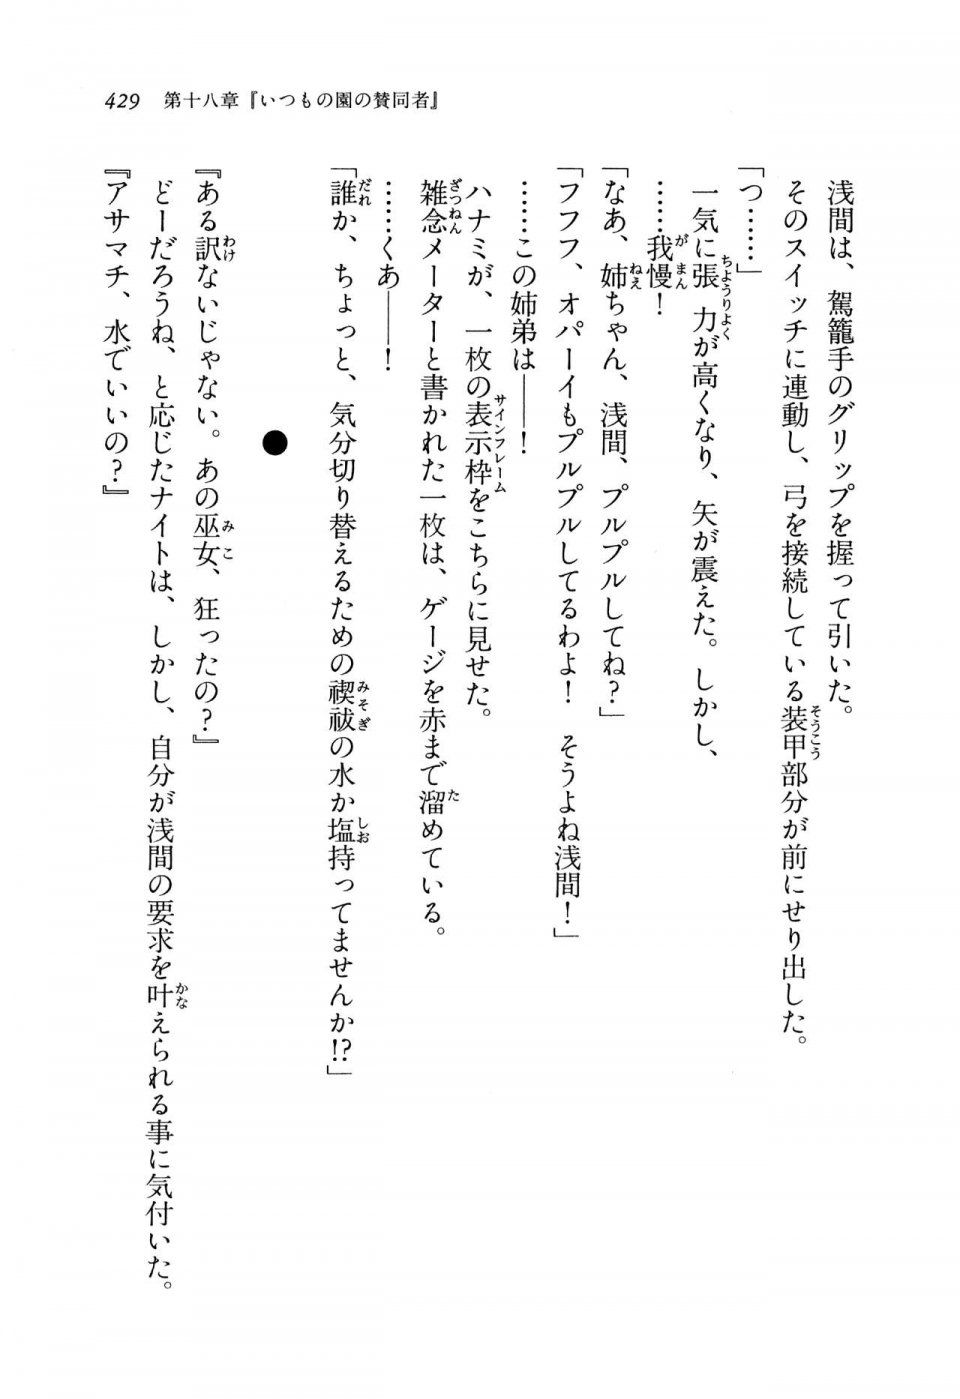 Kyoukai Senjou no Horizon BD Special Mininovel Vol 8(4B) - Photo #433